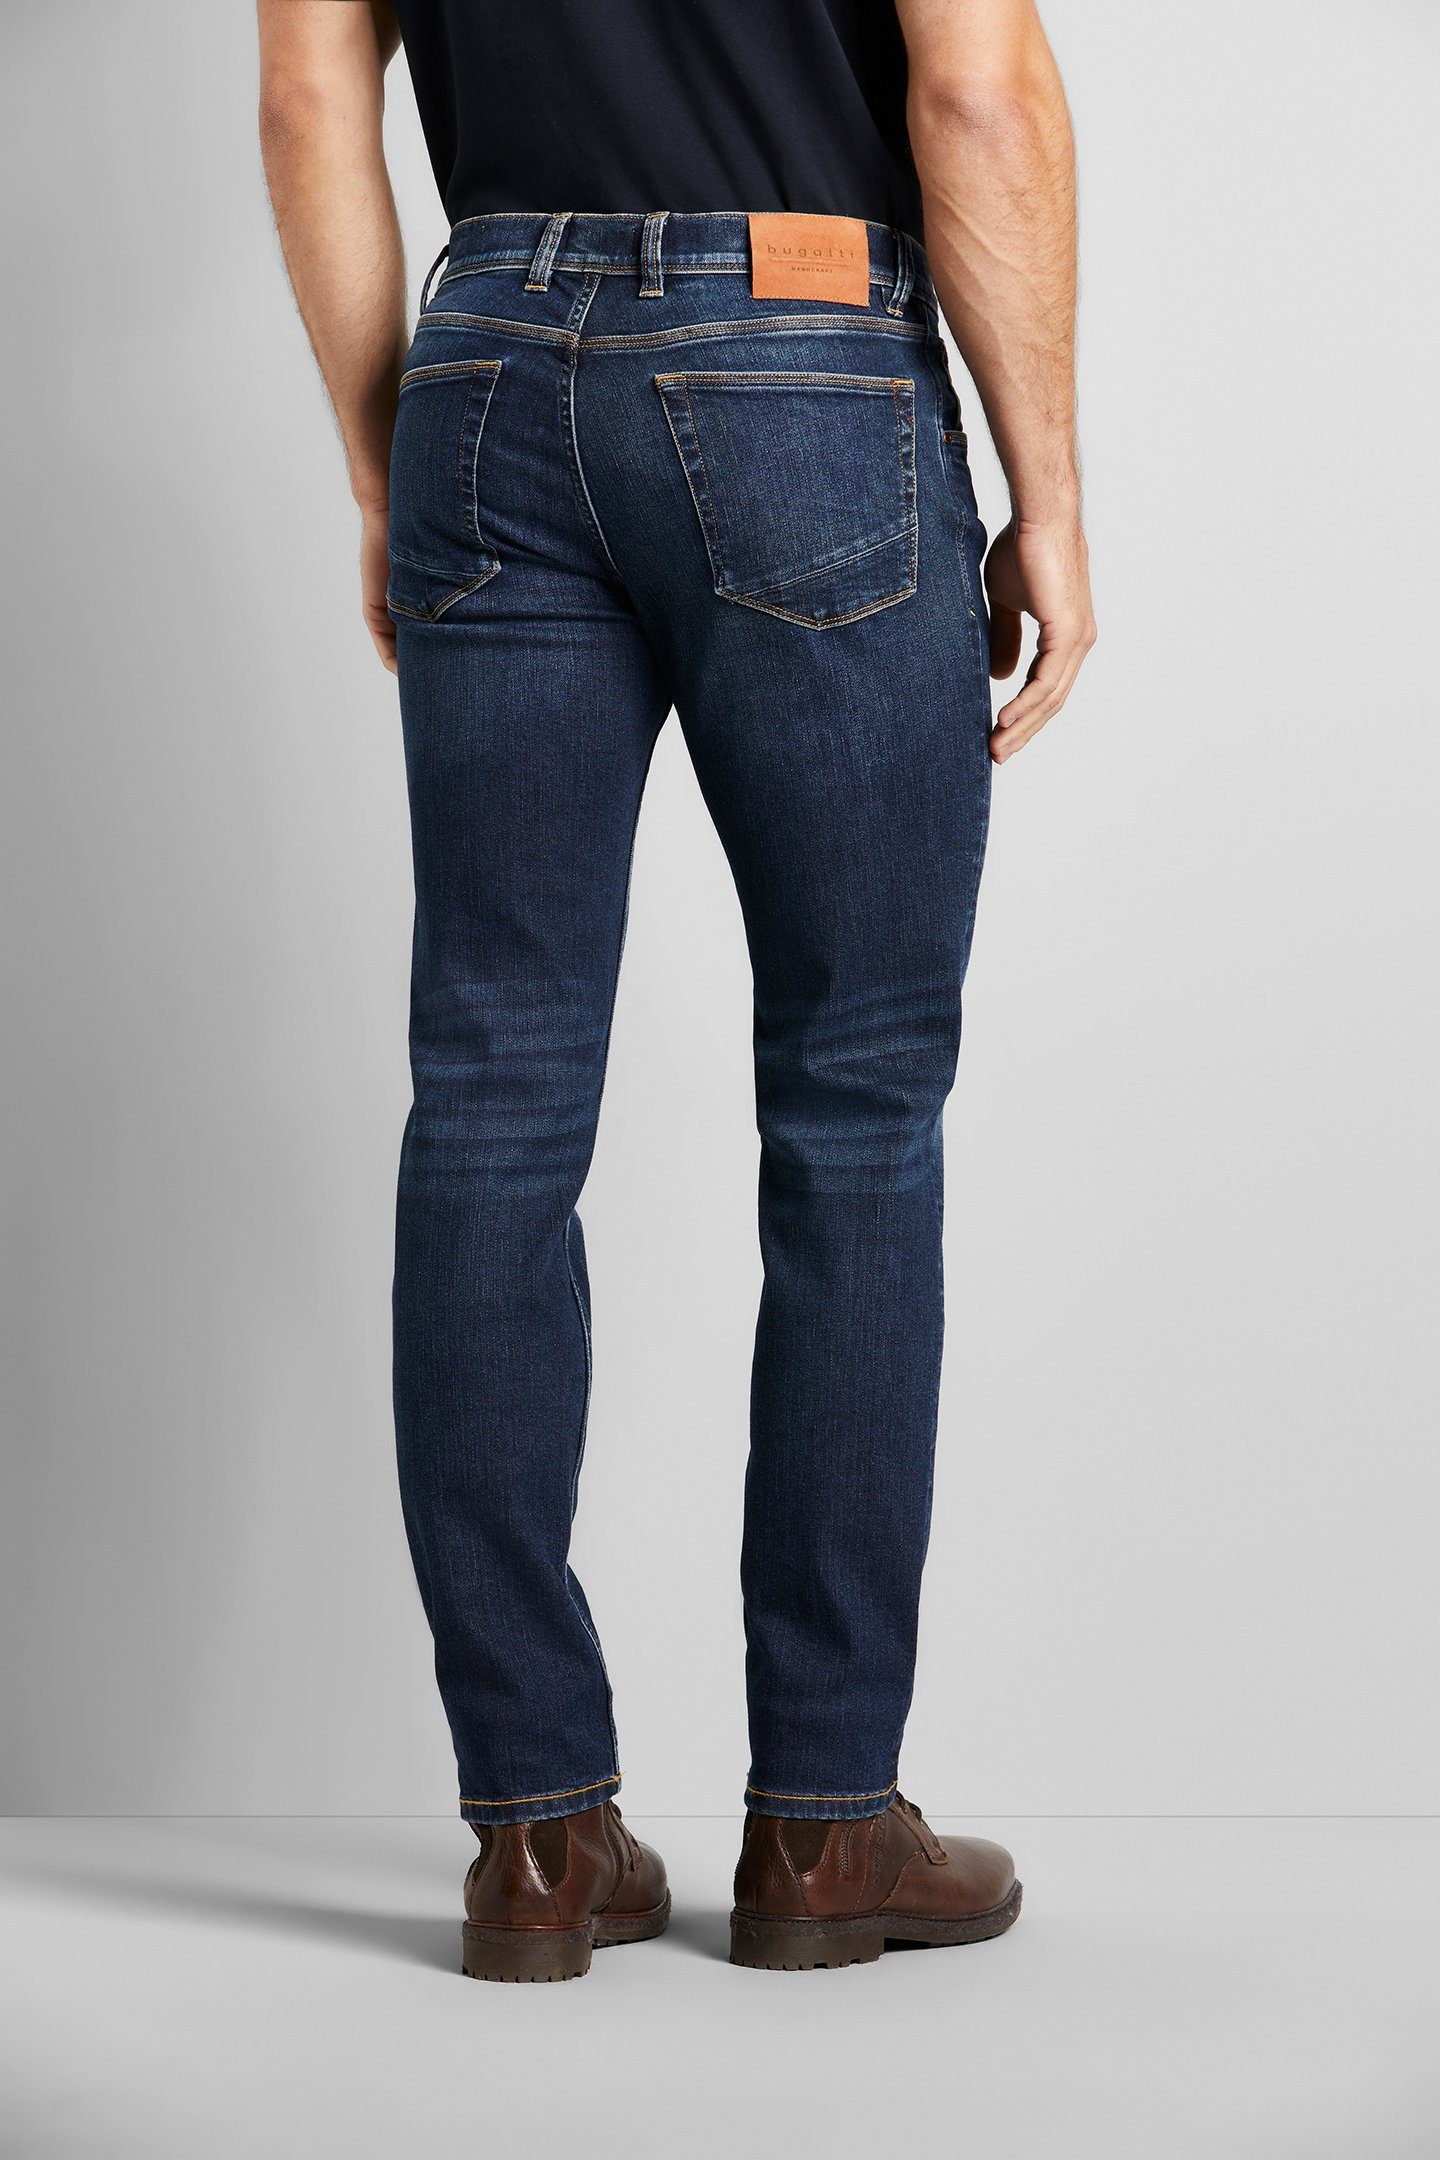 Used Look 5-Pocket-Jeans bugatti Wash im marine